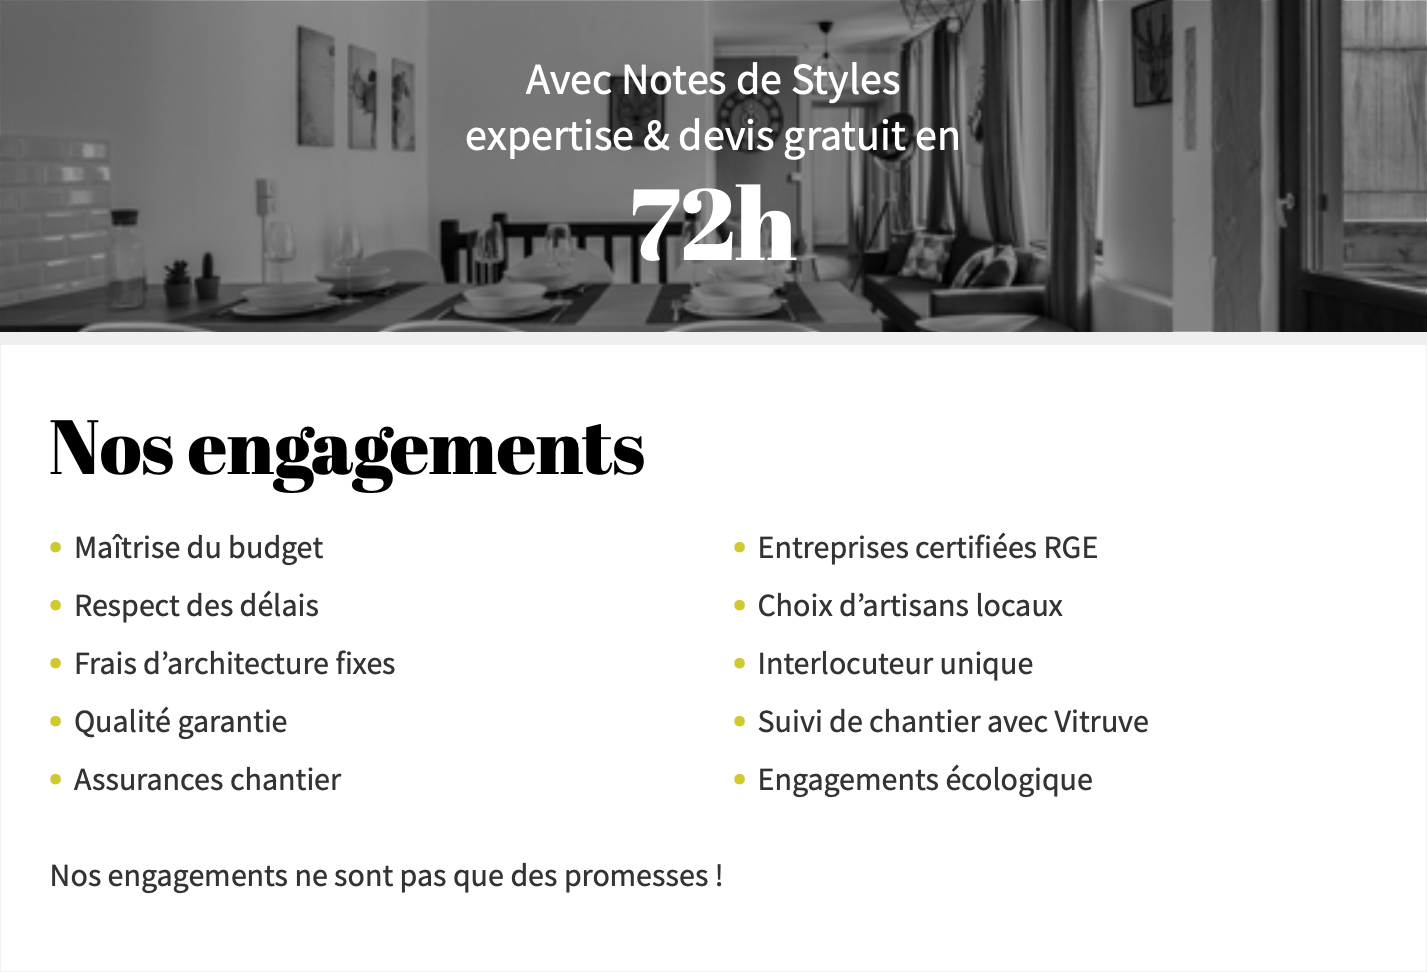 Notes de Styles Alpes-Maritimes - Nos engagements